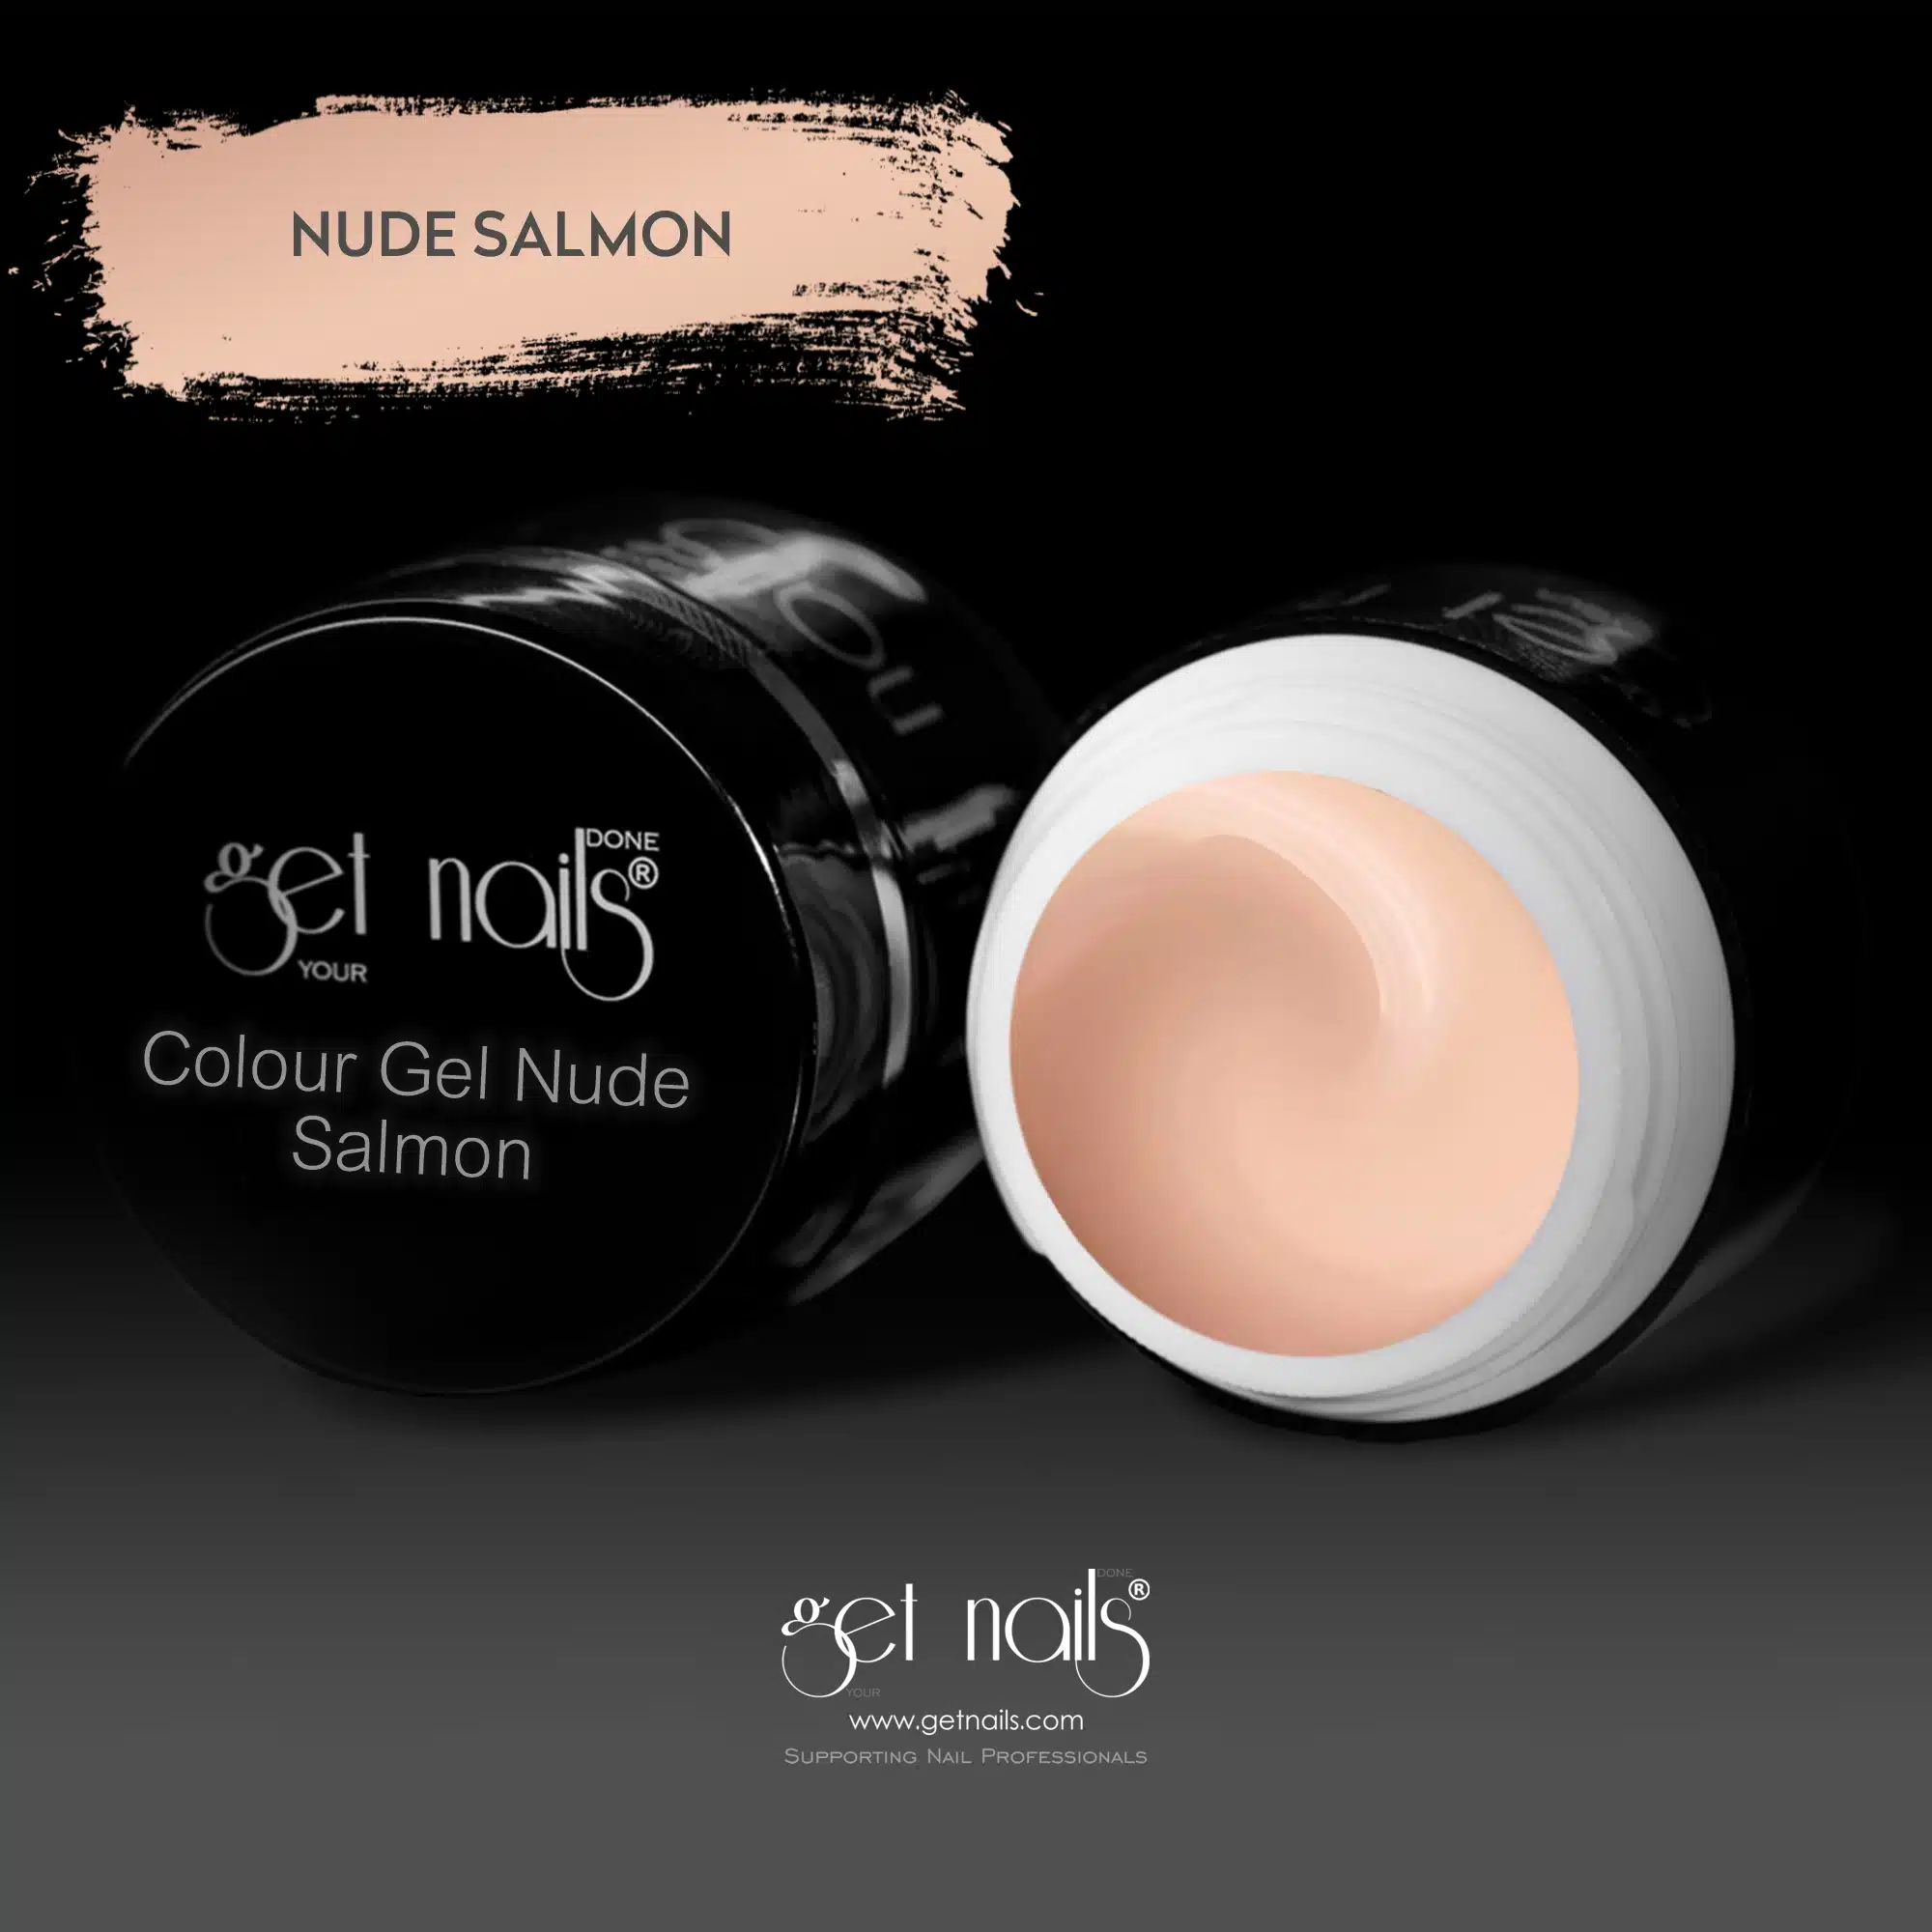 Get Nails Austria - Цветной гель Nude Salmon 5g